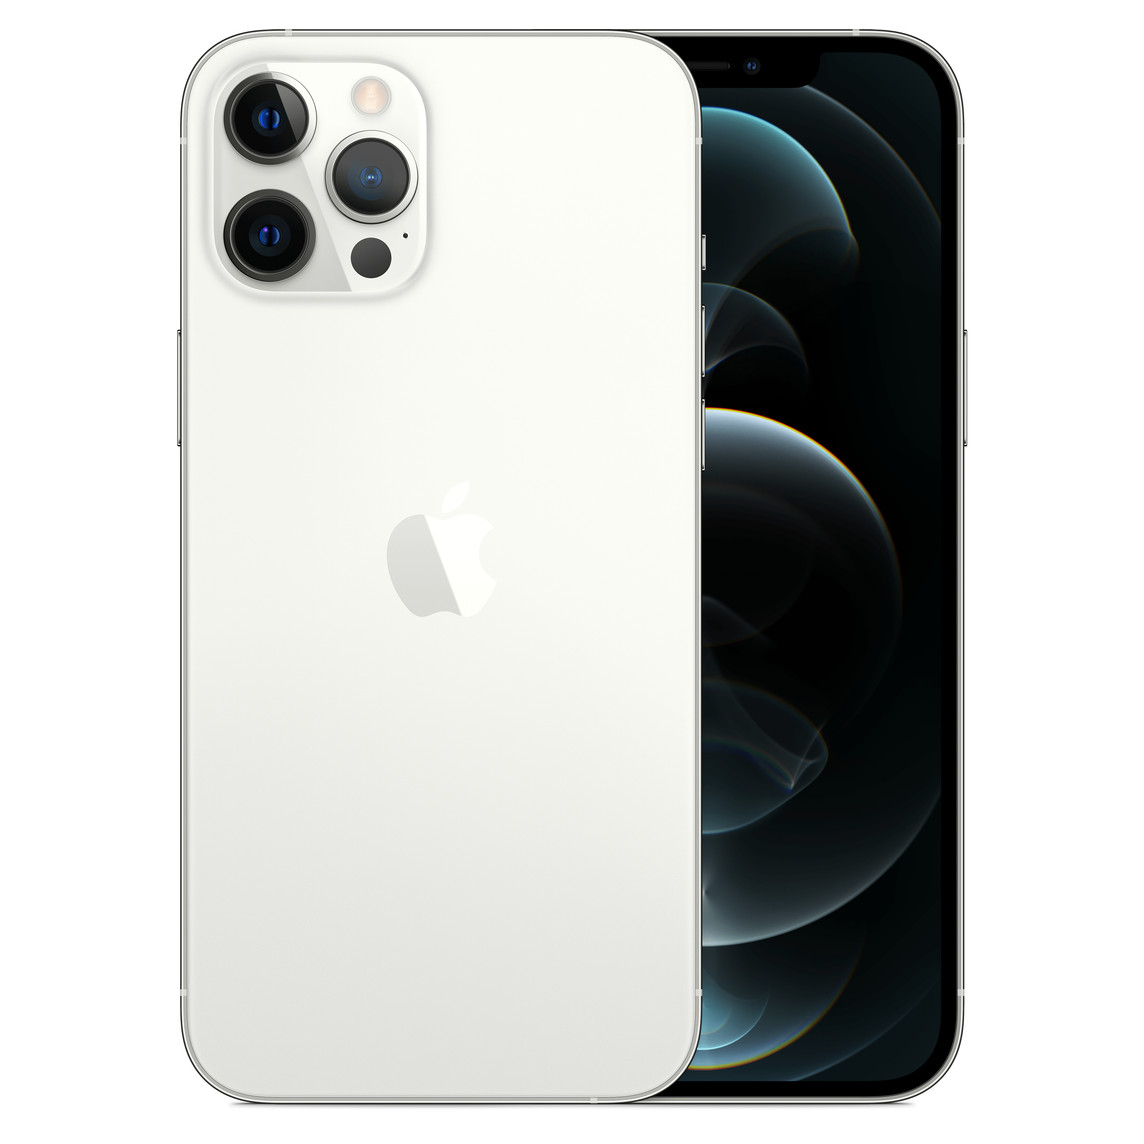 iPhone 12 Pro Max in Silber, Pro Kamera-System mit True Tone Blitz, LiDAR, Mikrofon, Apple Logo in der Mitte. Vorderseite, All-Screen Display